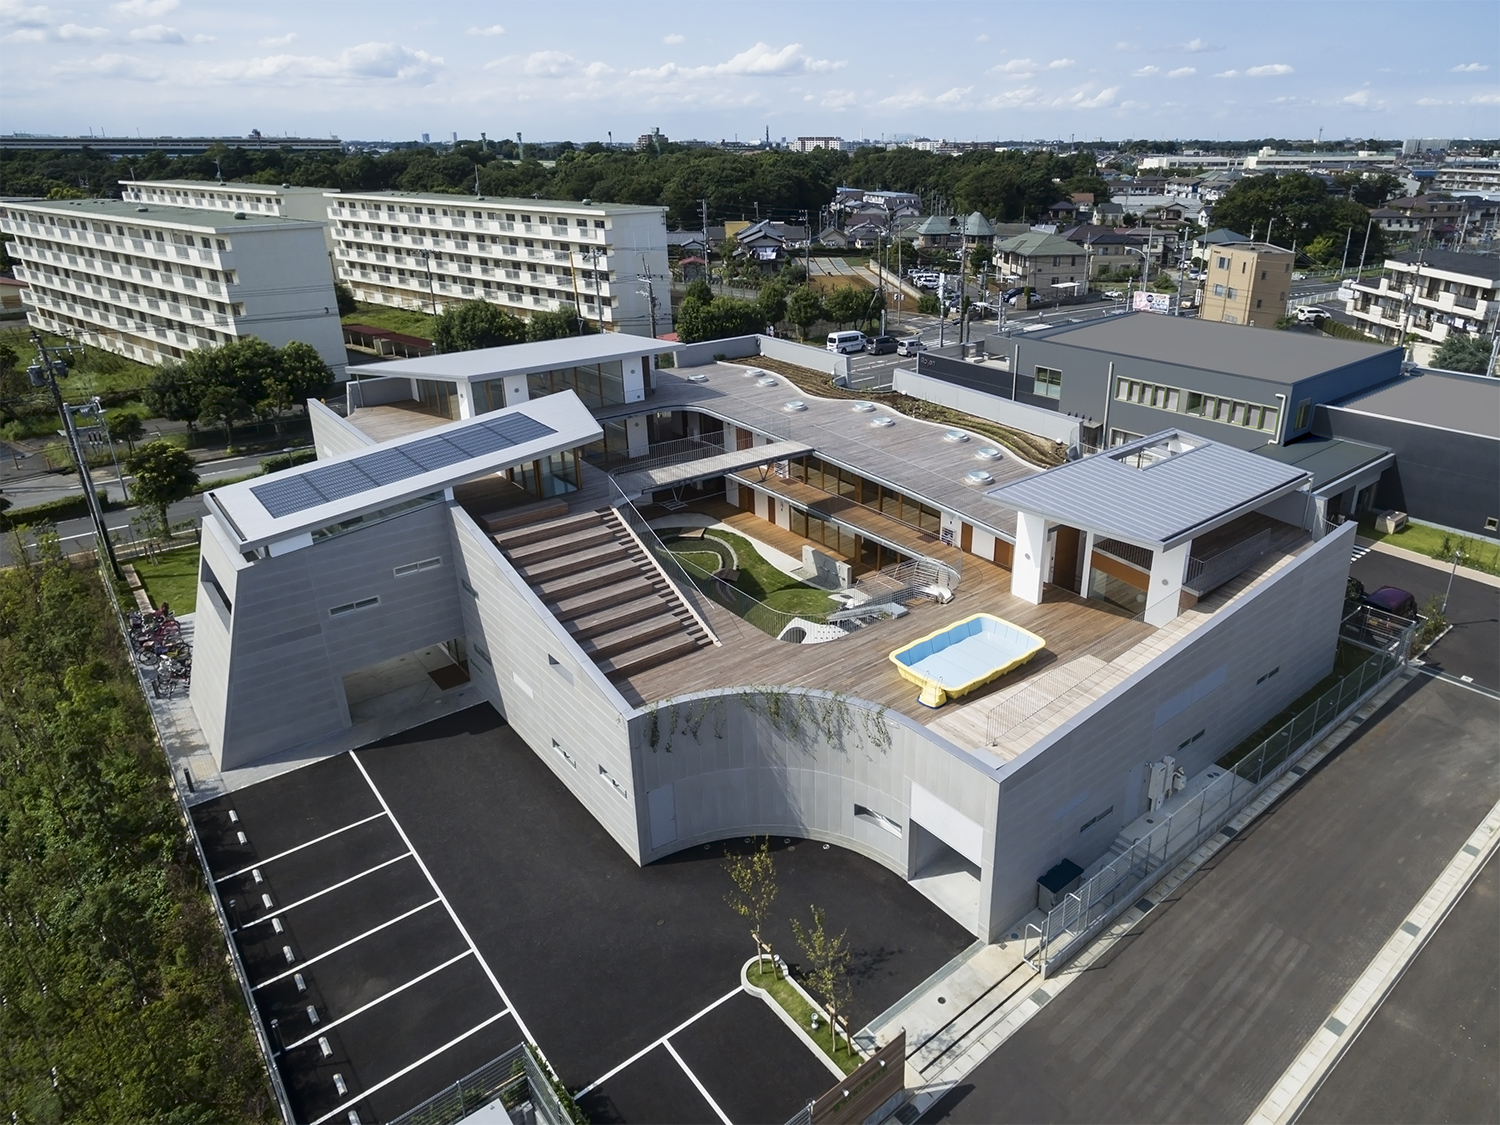 japanese school building layout